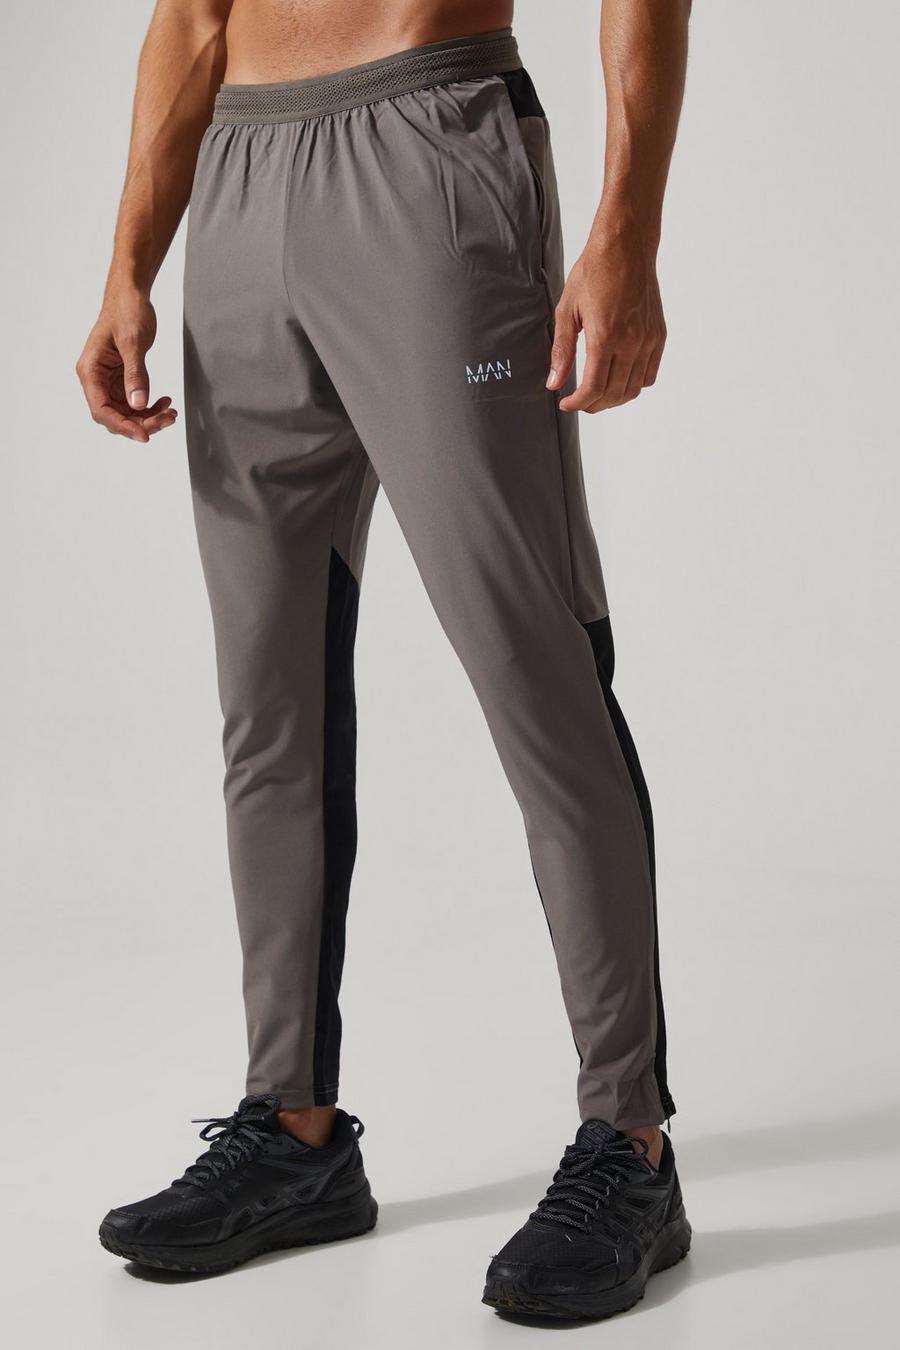 Man Active Performance Jogginghose mit Reißverschluss-Taschen, Charcoal grau